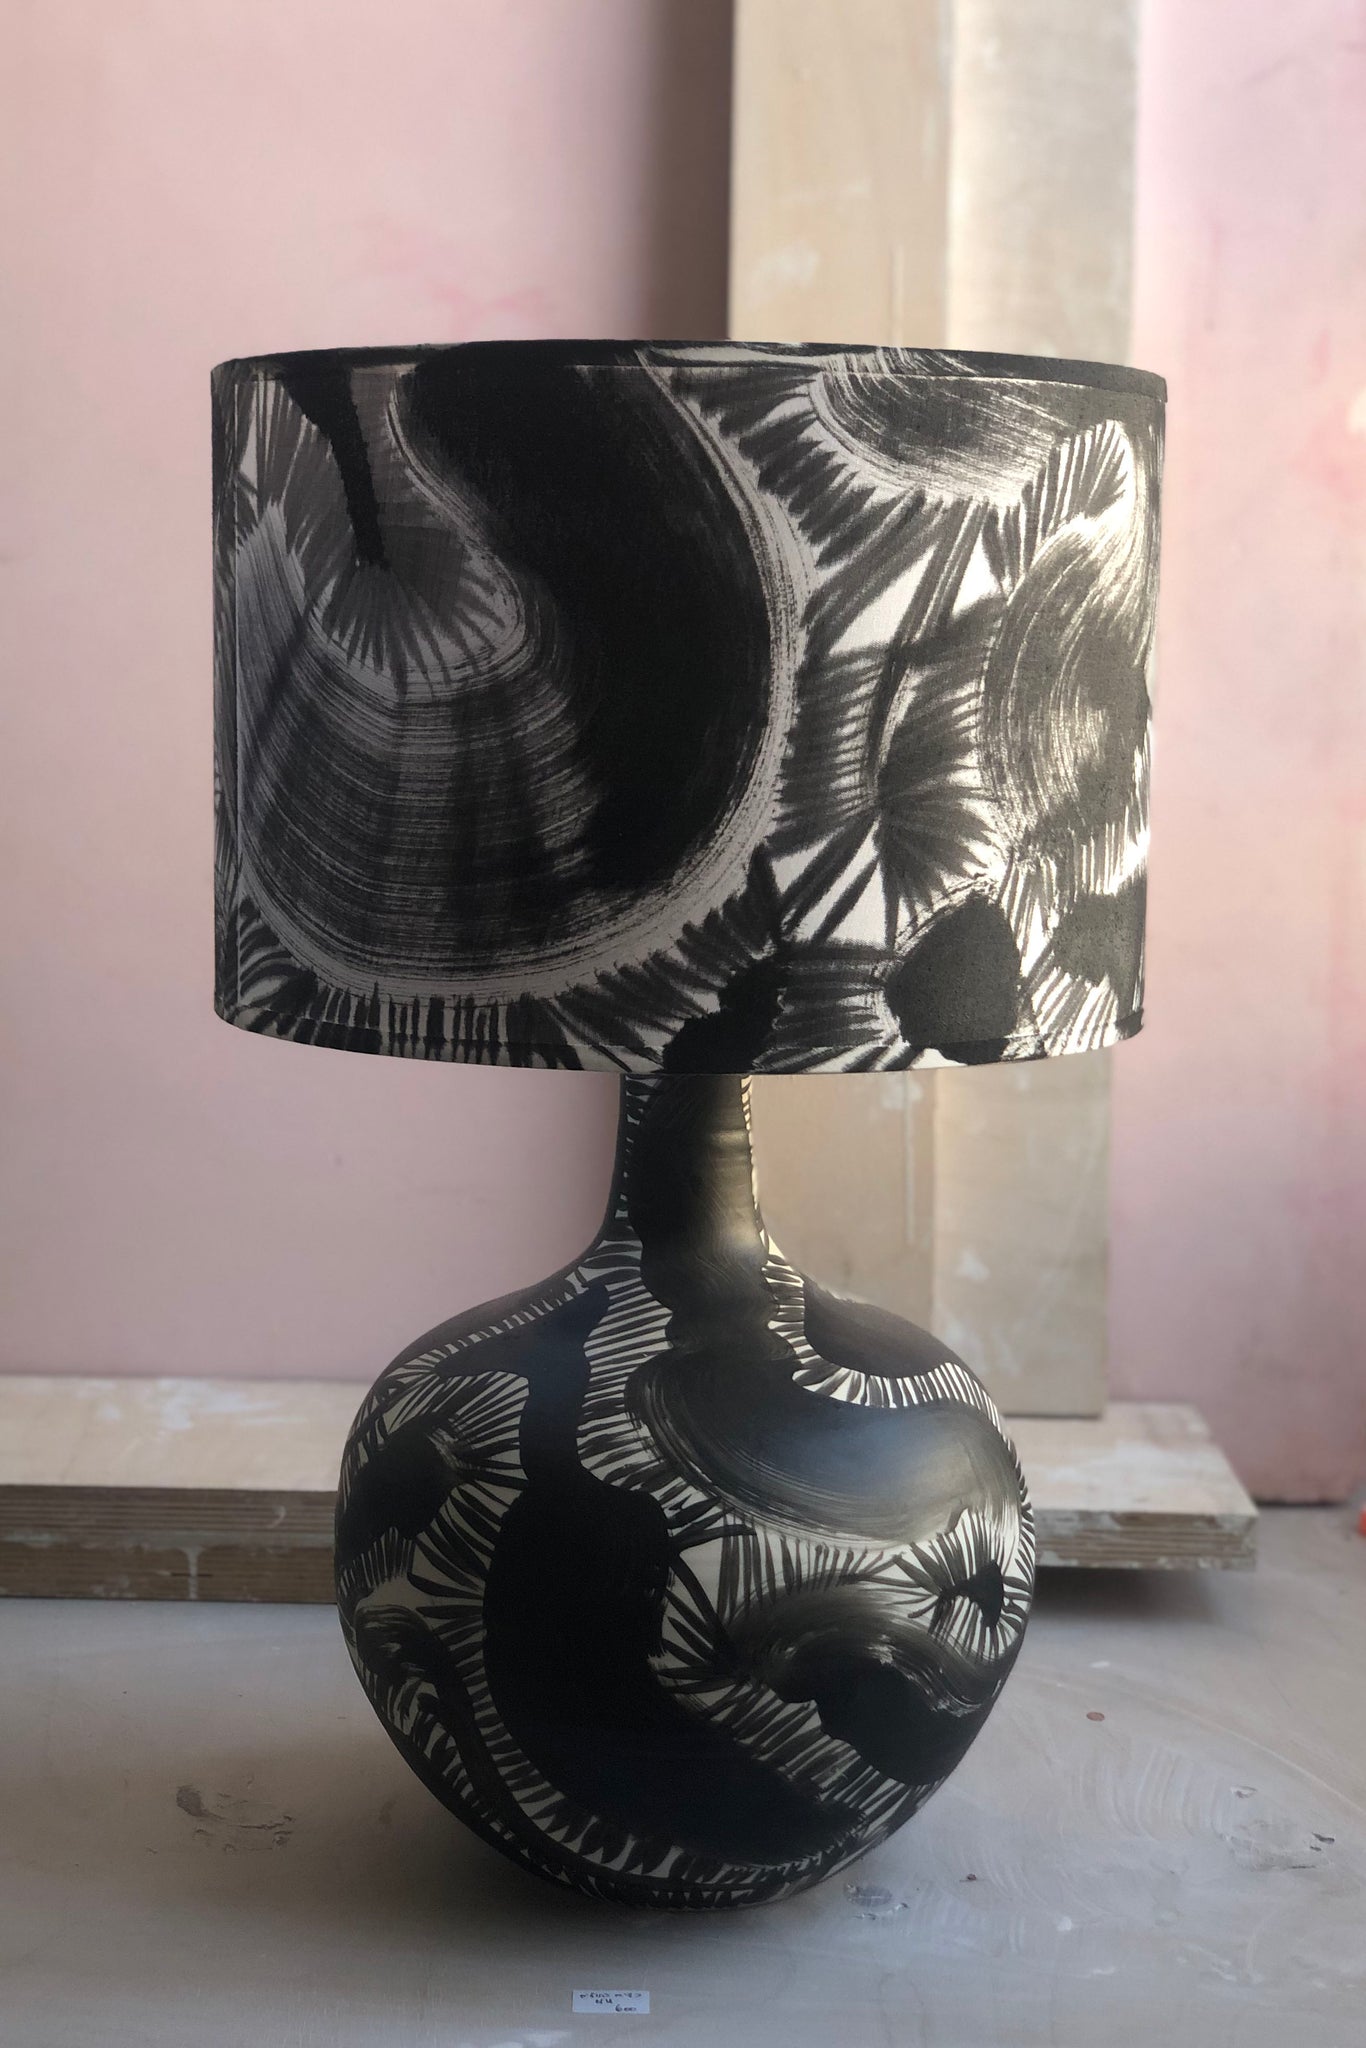 Black and White Lamp #2